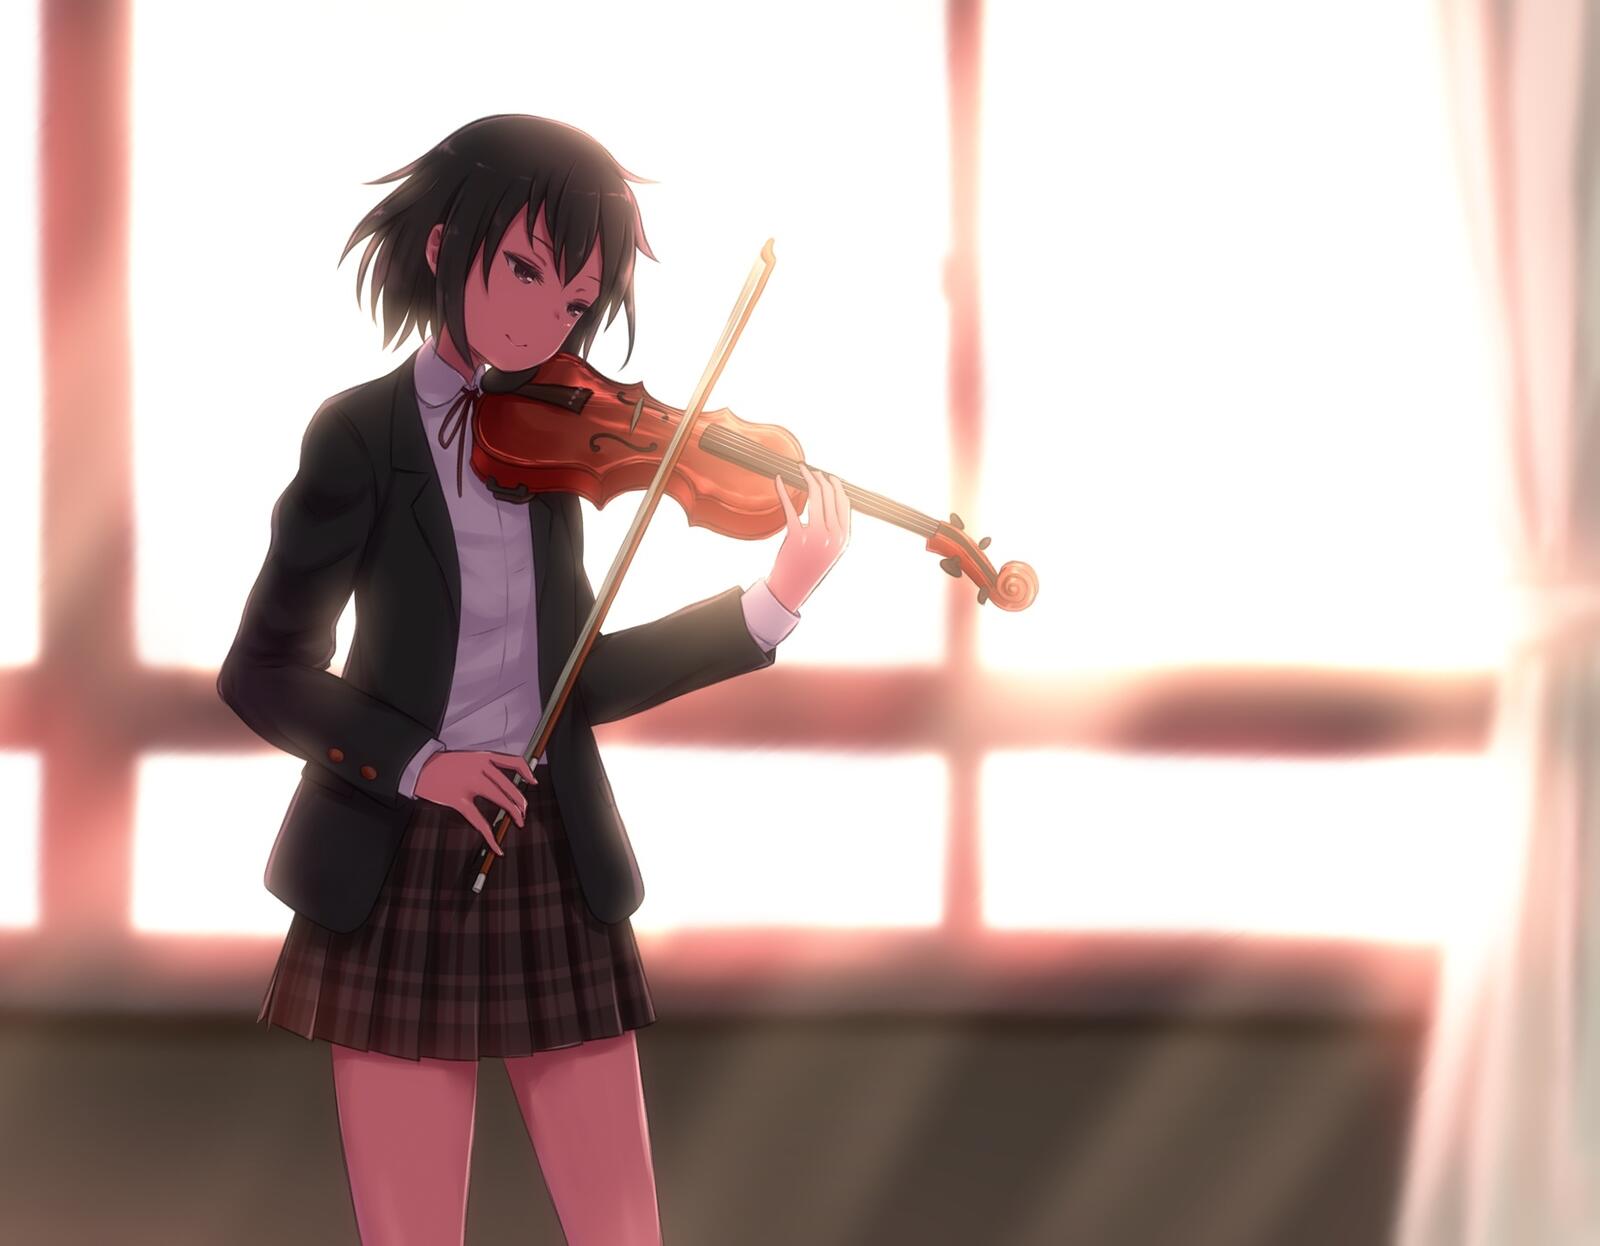 Wallpapers anime girl violin school uniform on the desktop